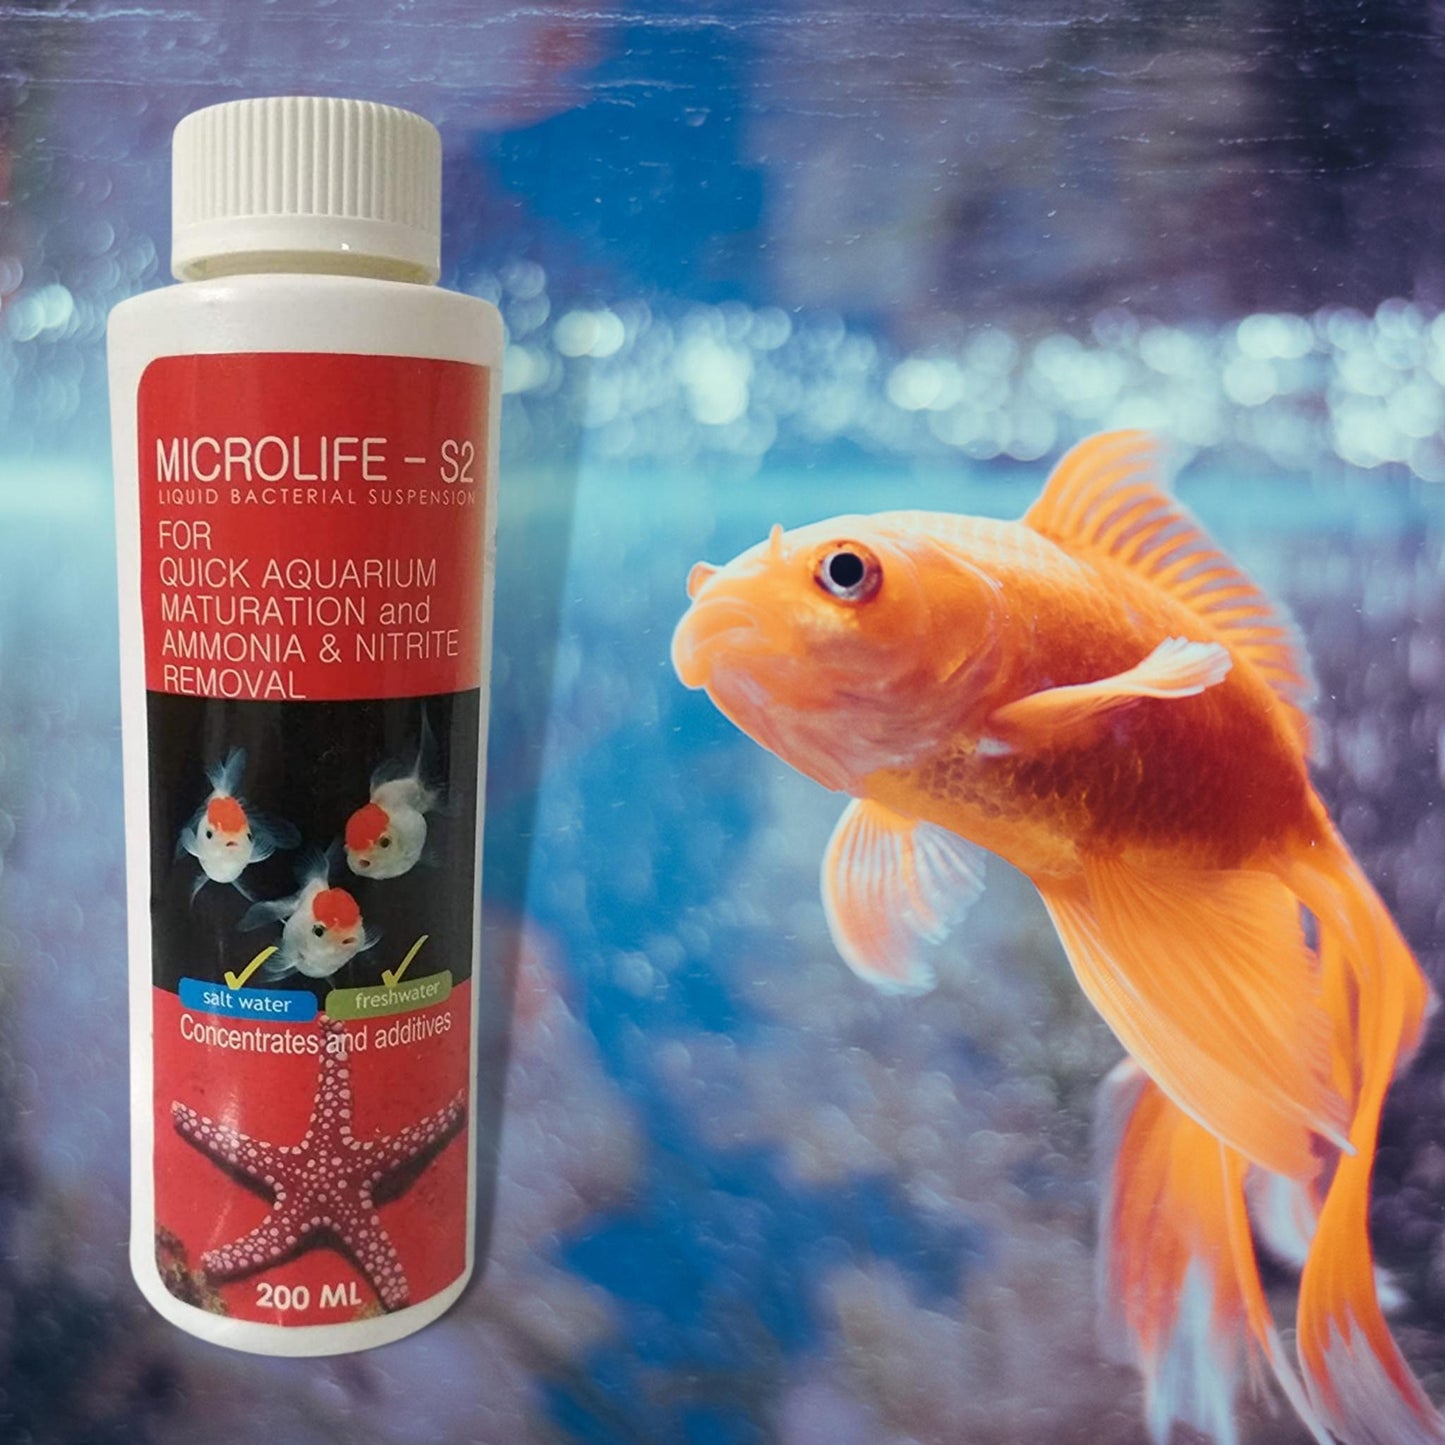 Aquatic Remedies Microlife-S2, 200ml (Pack of 2) | Fresh & Salt Water